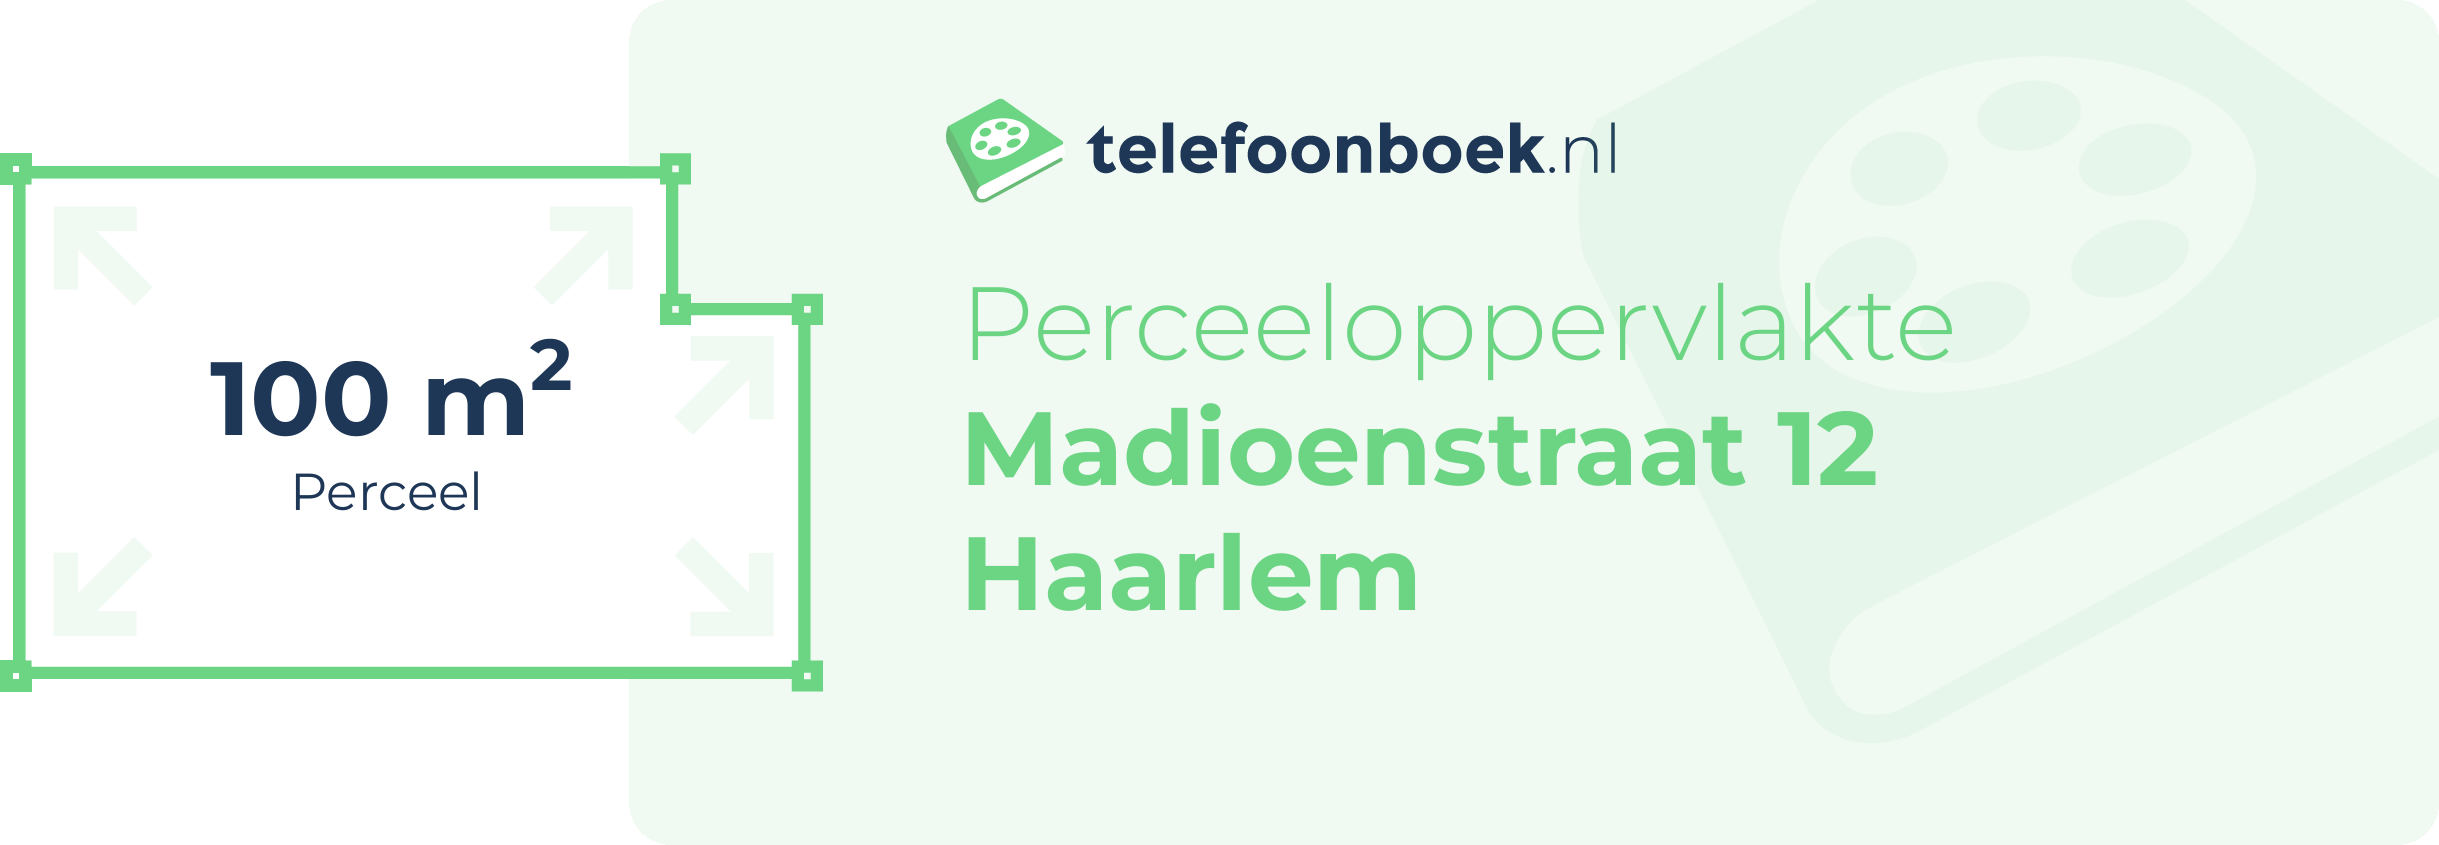 Perceeloppervlakte Madioenstraat 12 Haarlem